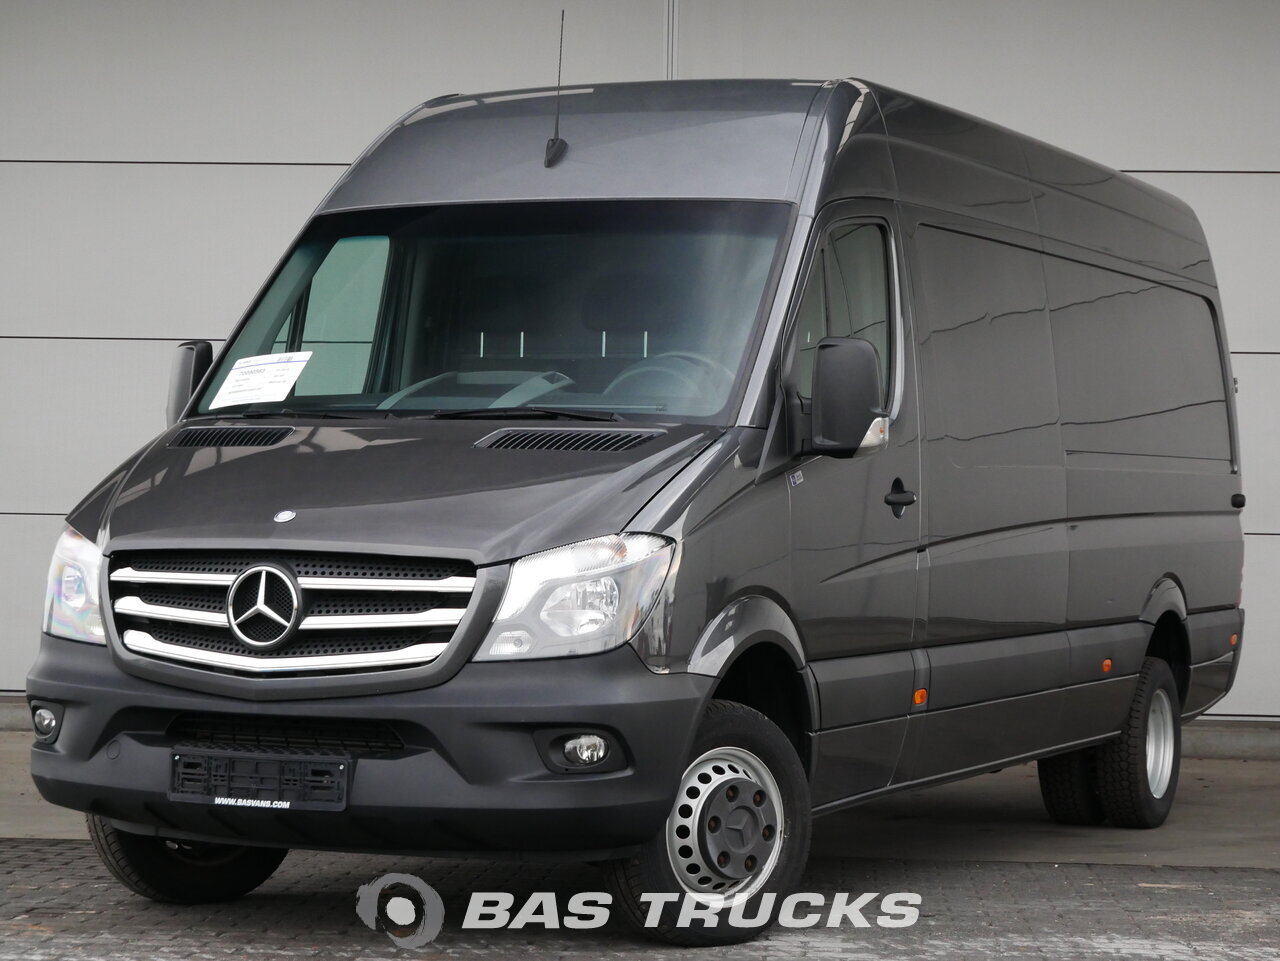 Mercedes Sprinter Light Commercial Vehicle 22400 Bas Trucks